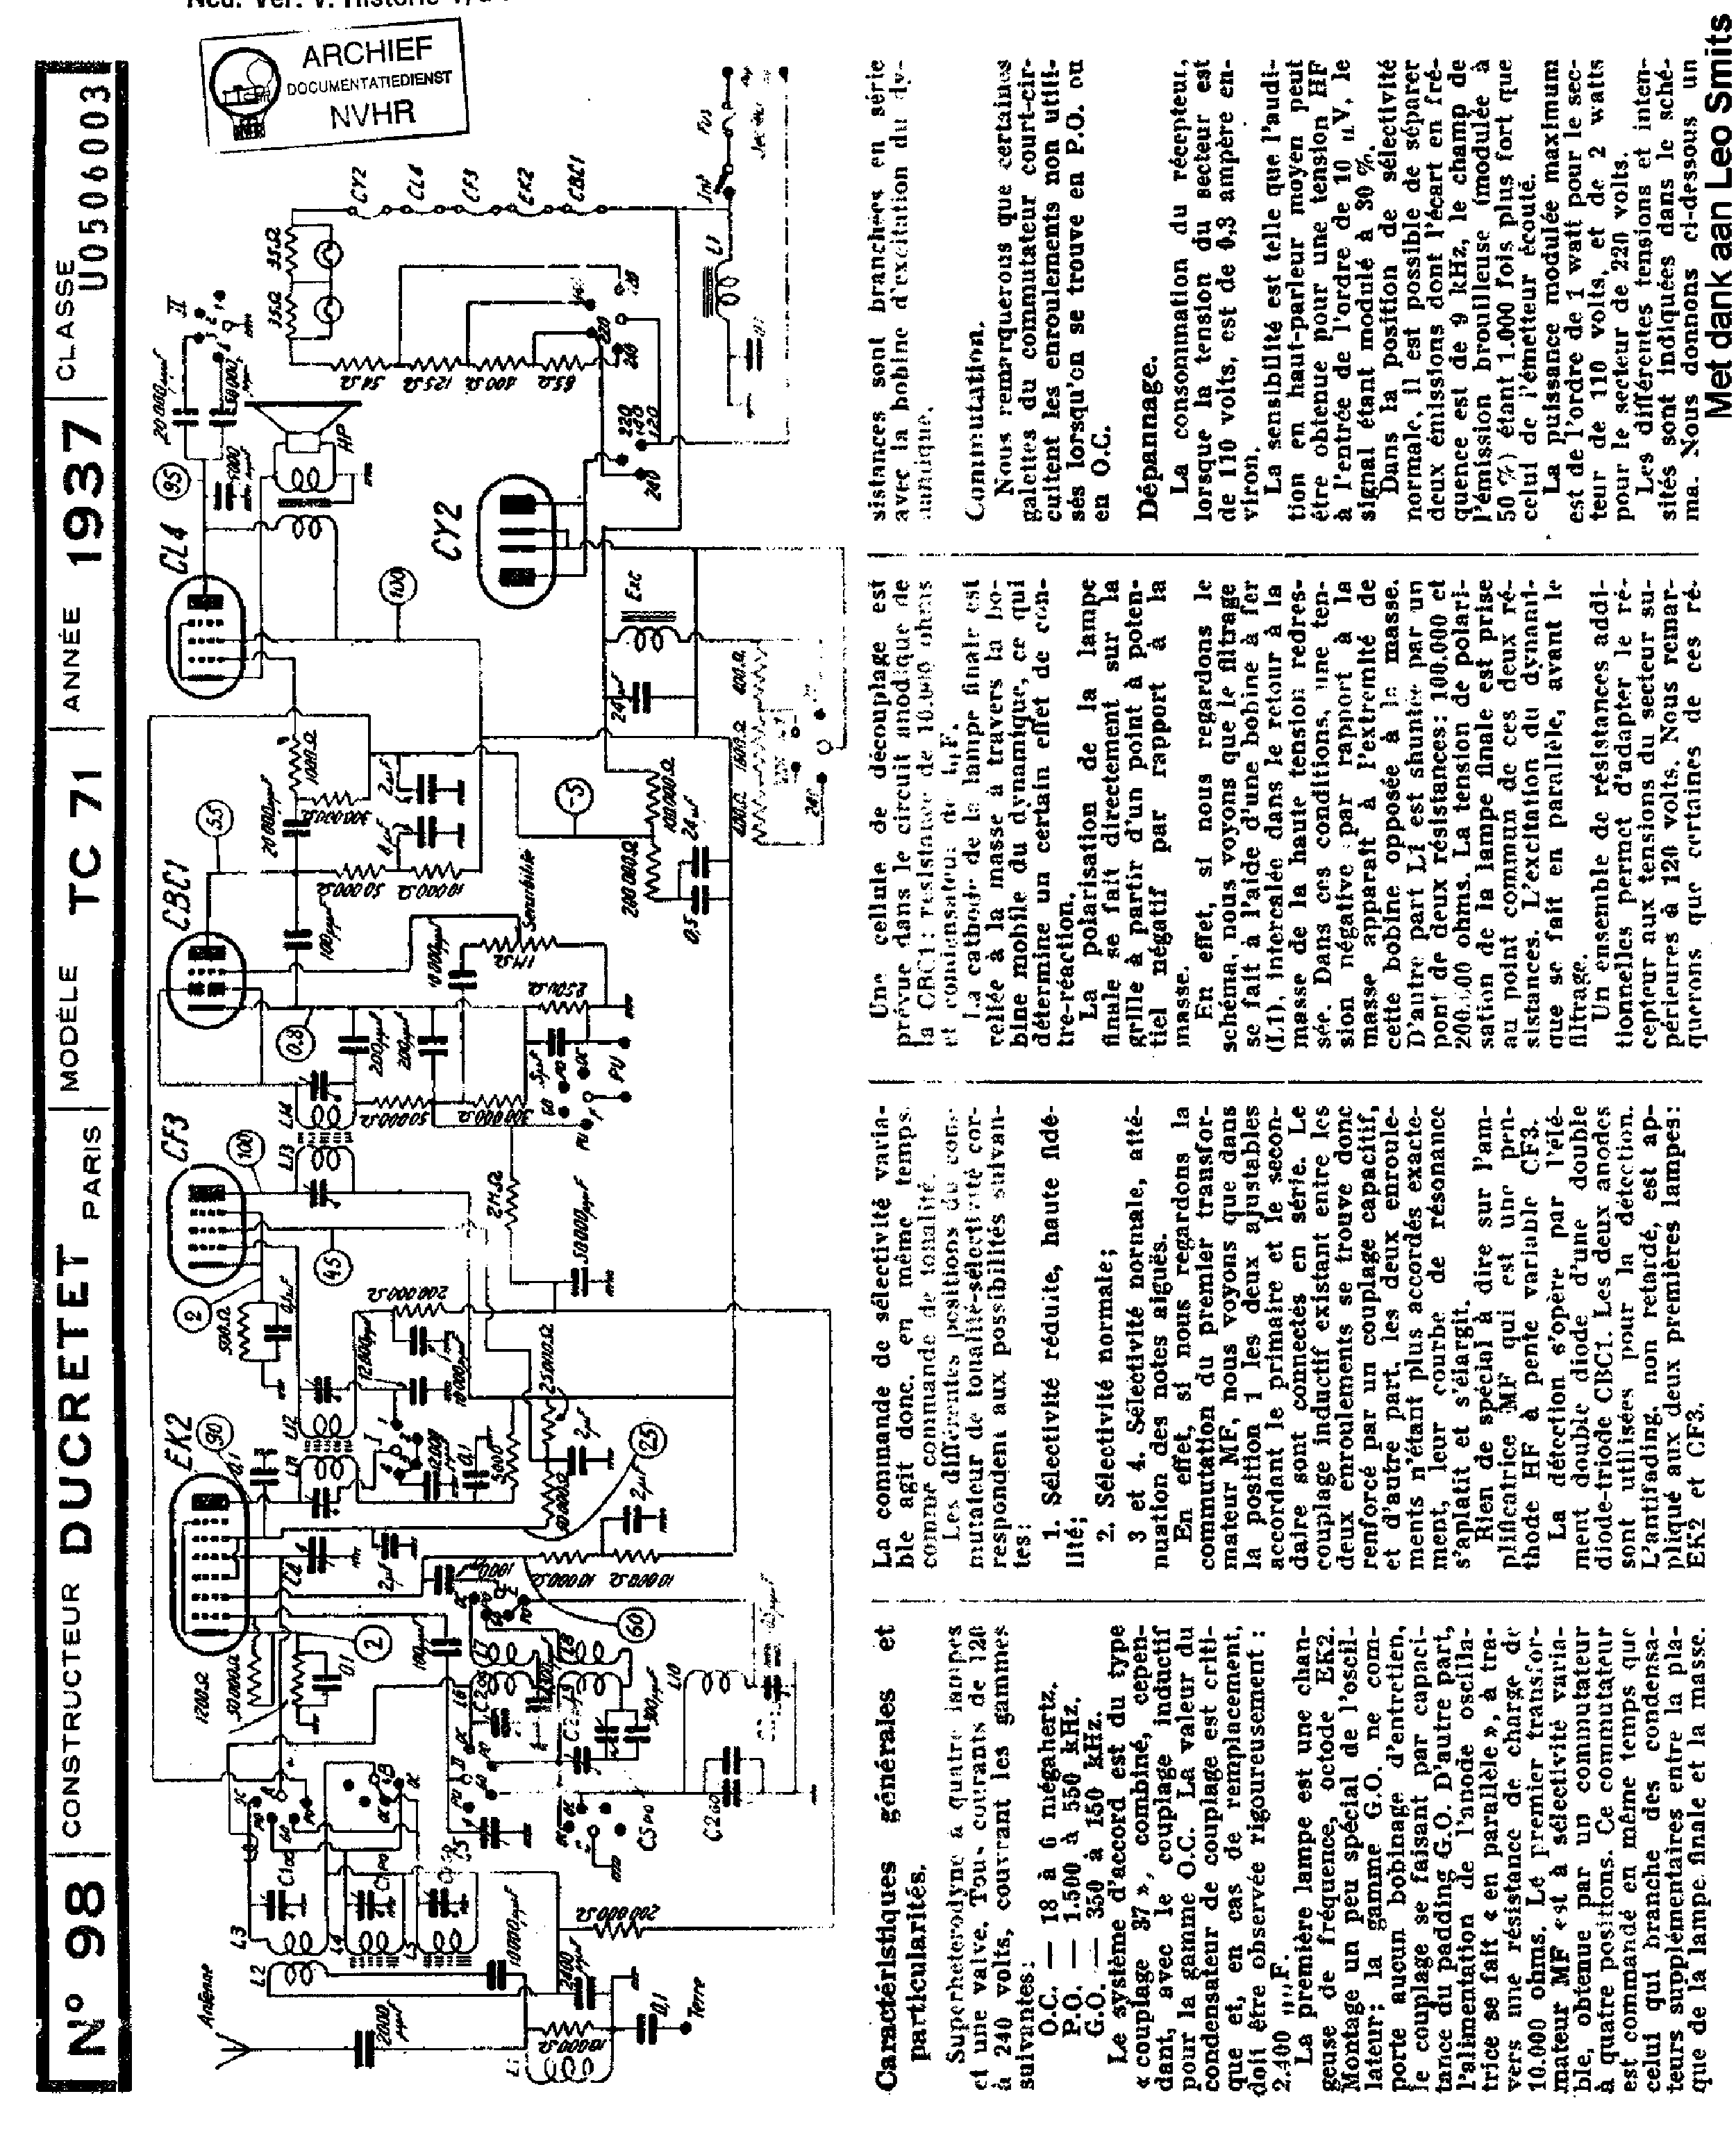 Ducretet Tc 70 71 Ac Dc Receiver 1937 Sch Service Manual Download Schematics Eeprom Repair 